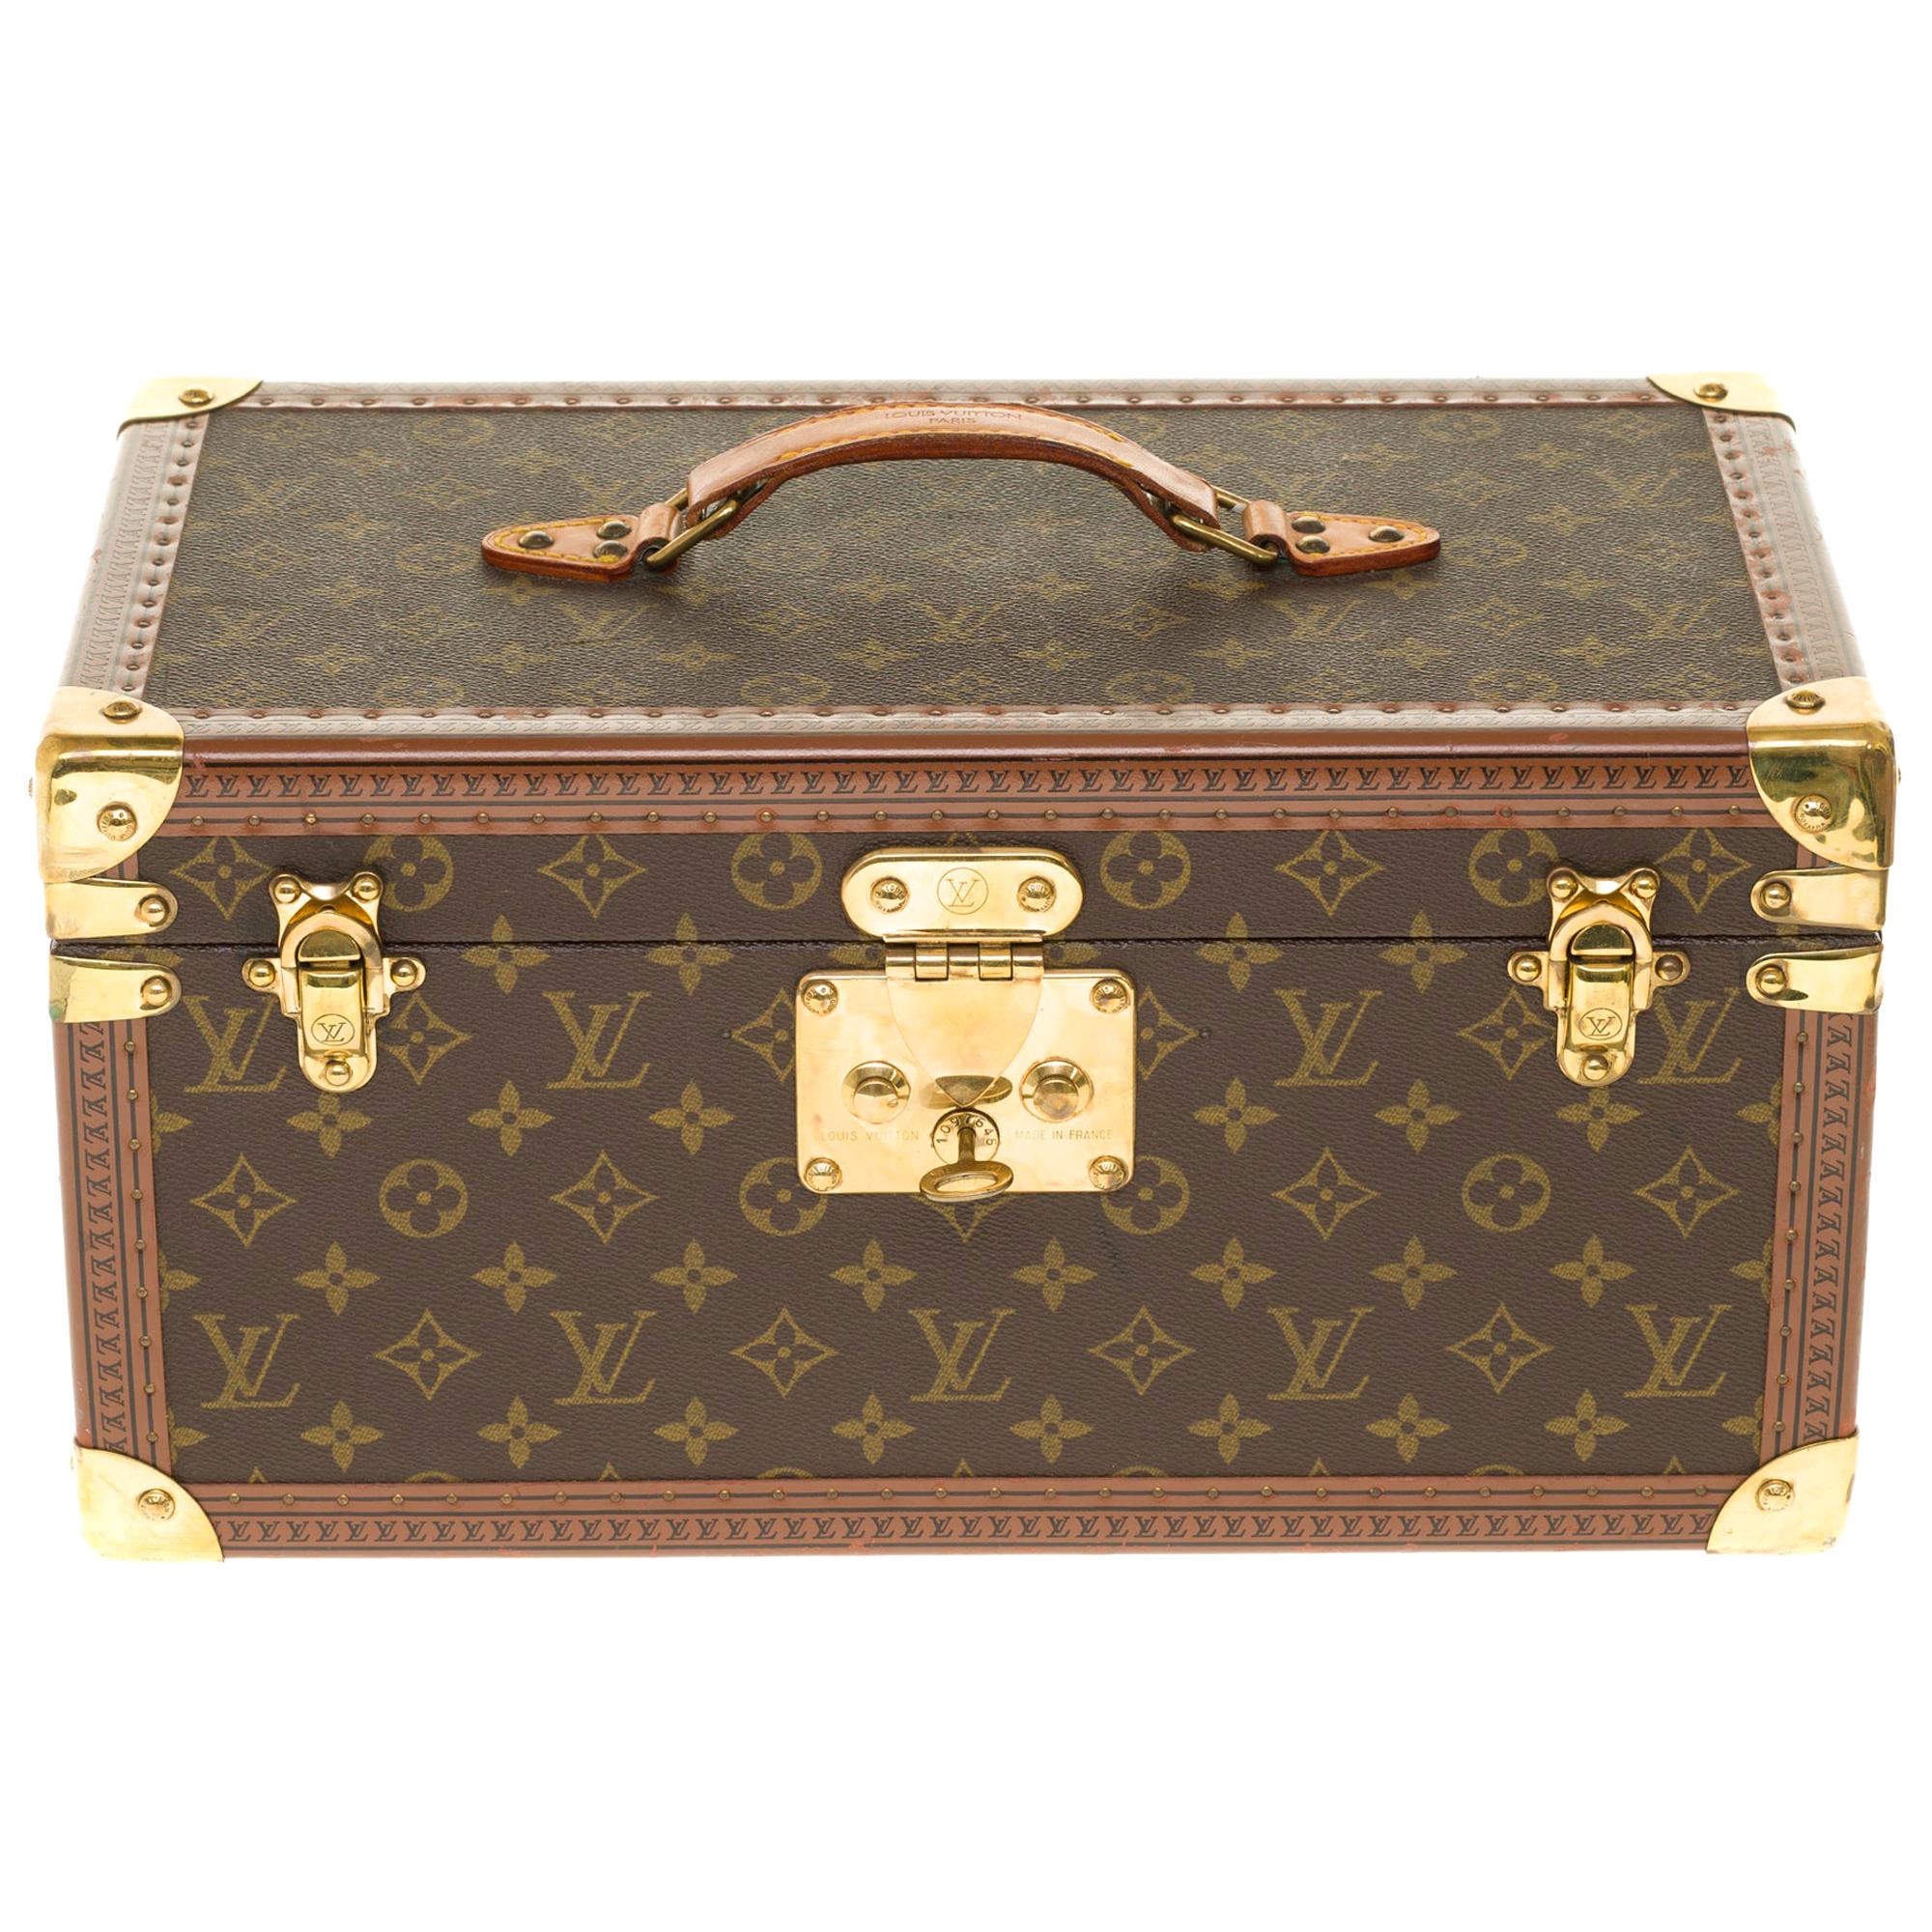 Amazing Louis Vuitton Vanity Case in monogram Canvas and brass hardware